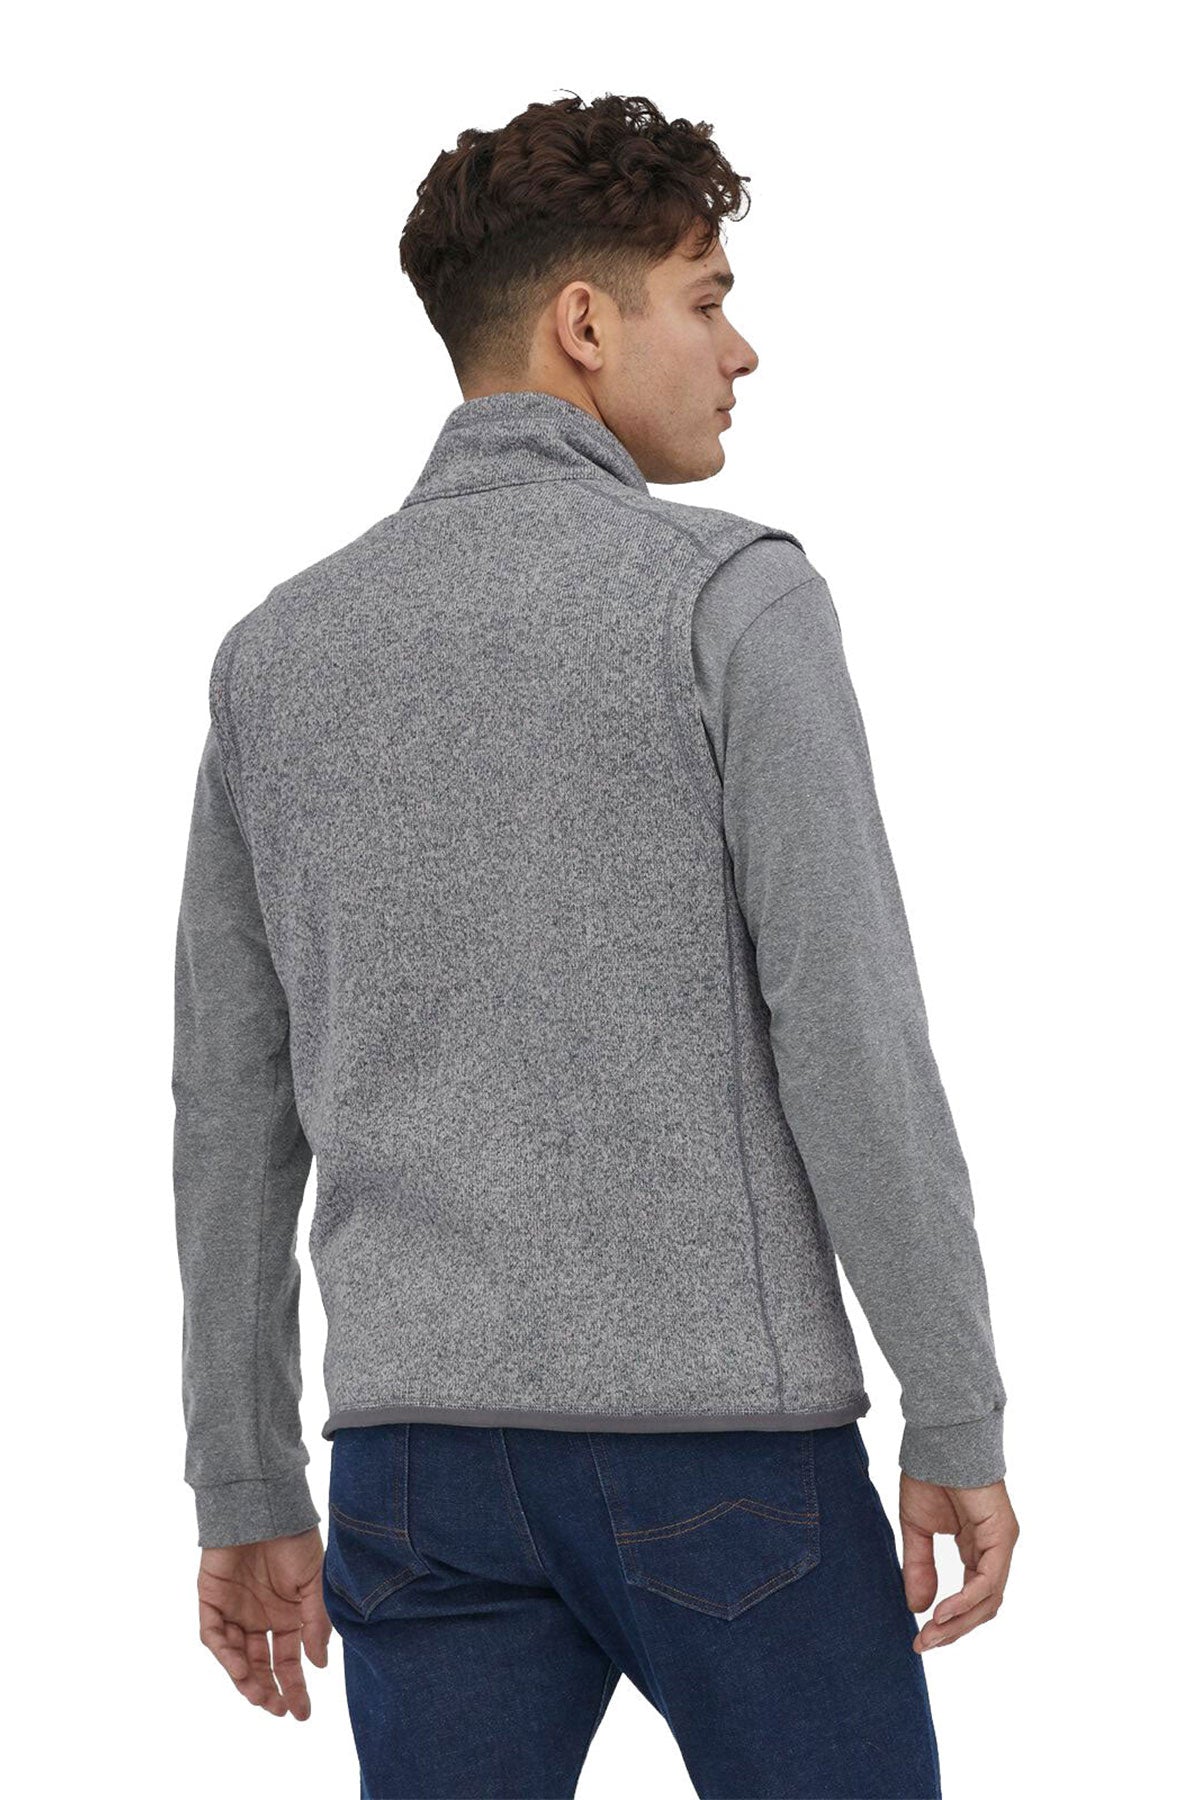 Patagonia Mens Better Sweater Fleece Customized Vests, Stonewash